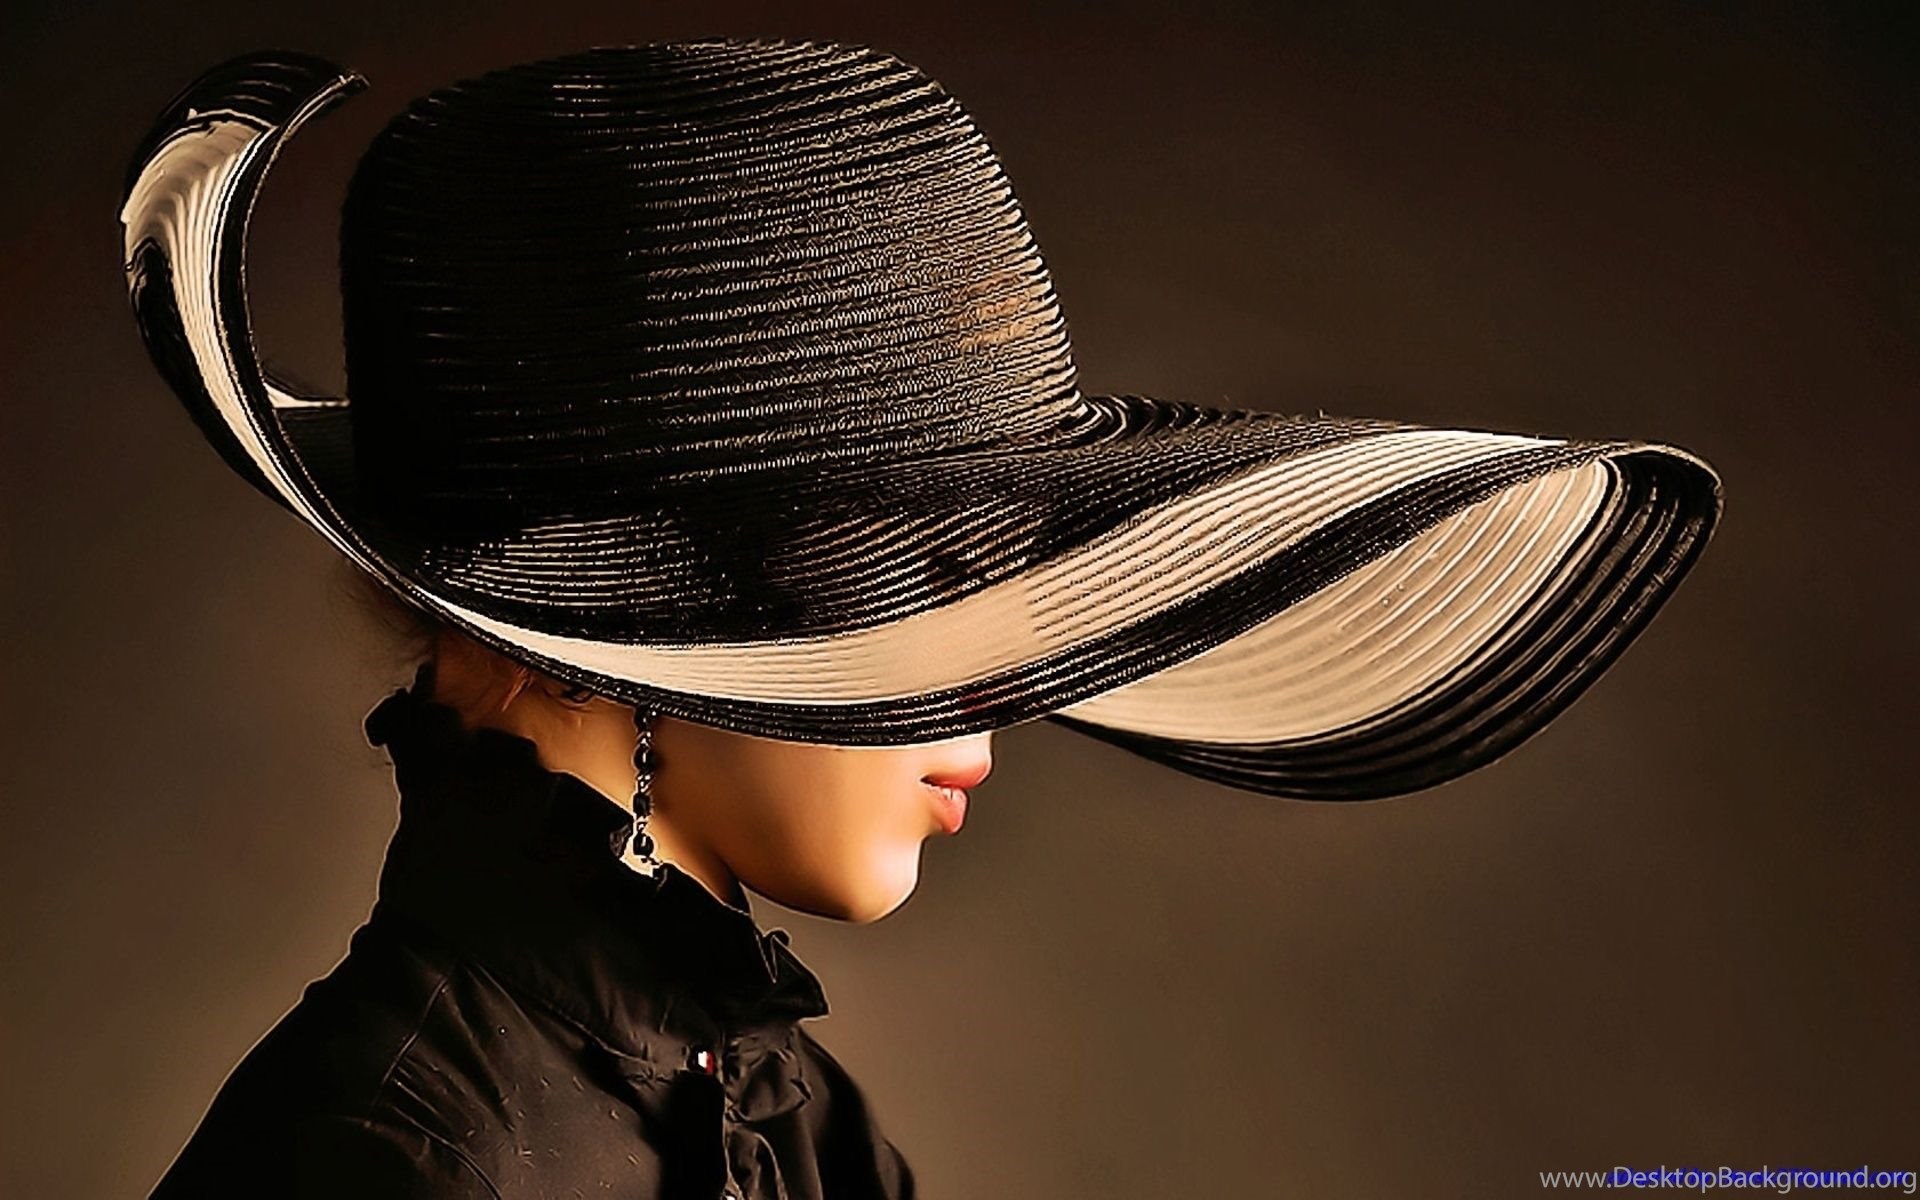 She hat got. Девушка в шляпе. Женщина в шляпке. Красивая женщина в шляпе. Дама в шляпке.